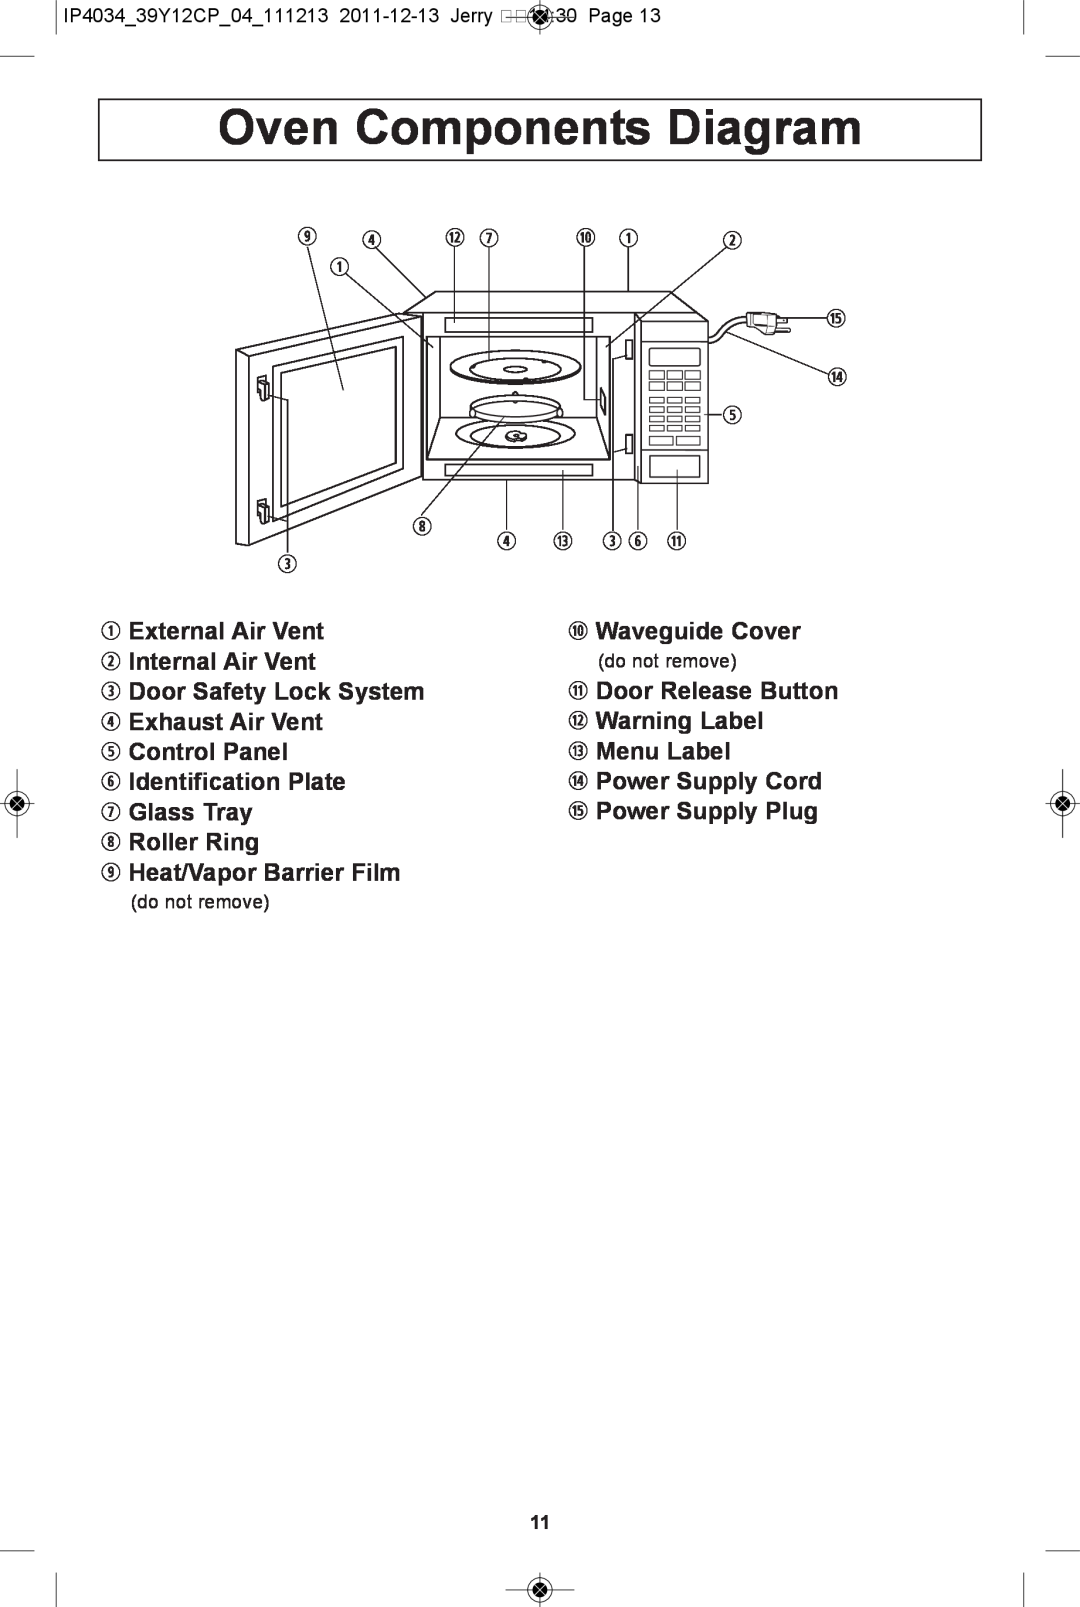 Panasonic NN-ST661S, NN-ST671S, NN-ST652W, NN-ST642W, NN-ST651W, NN-ST632W, NN-ST651B manual Oven Components Diagram 